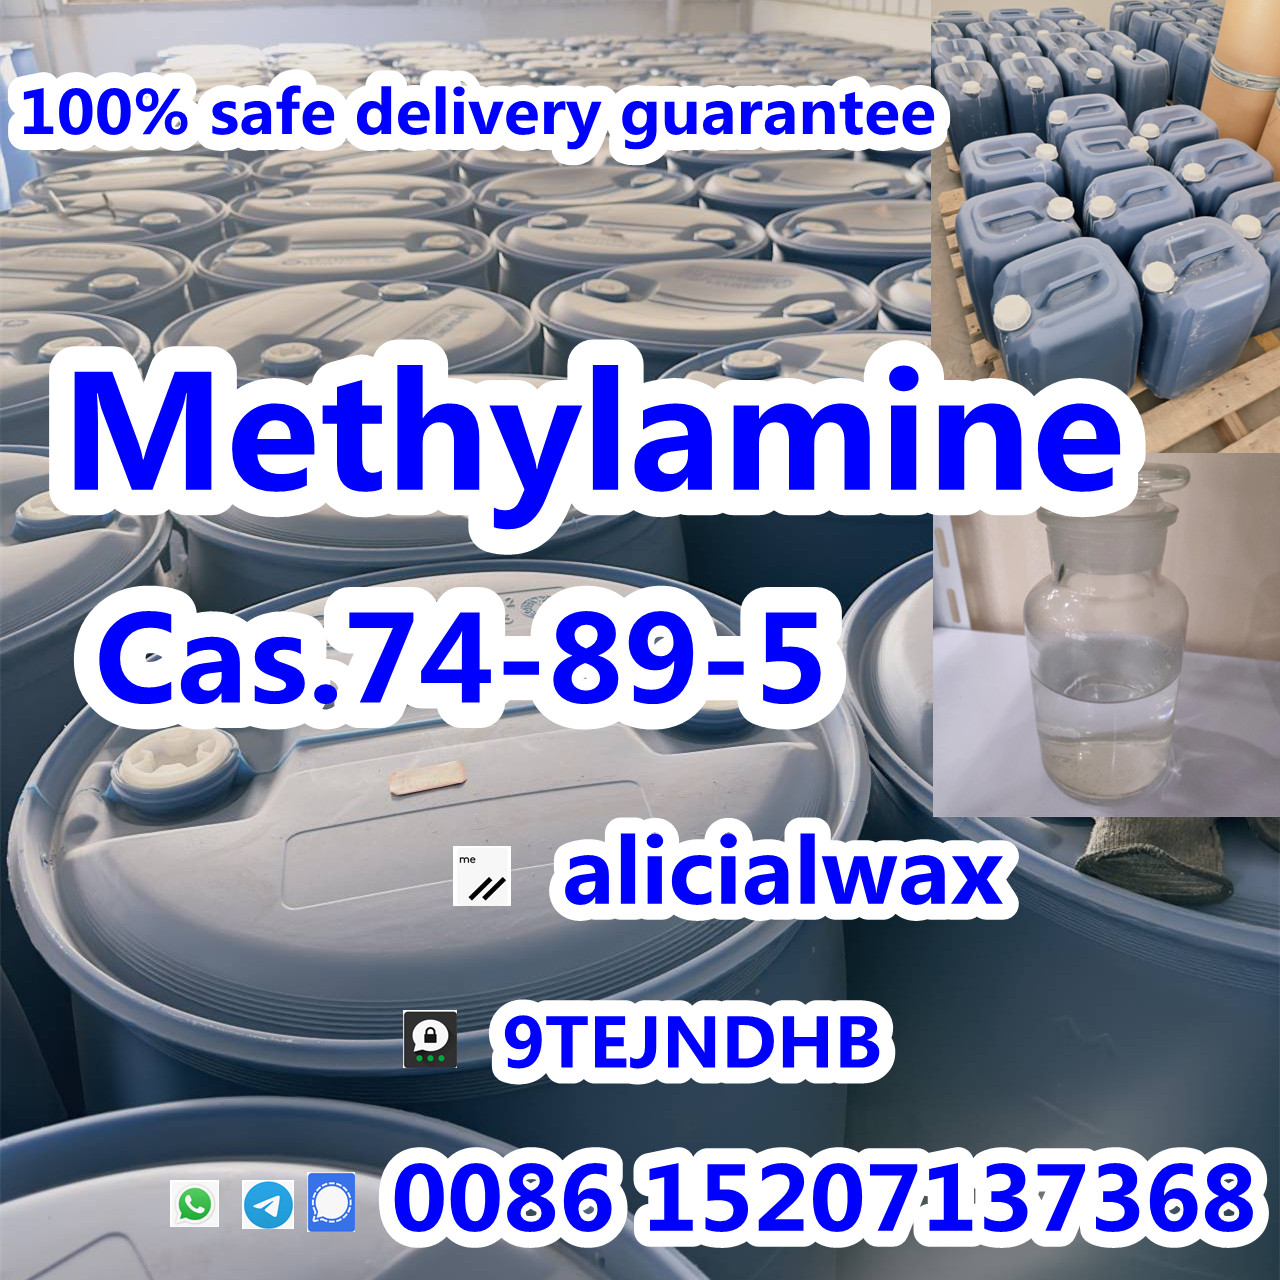 40% Methylamine solution Cas.74-89-5 safe delivery to UK/Holland รูปที่ 1